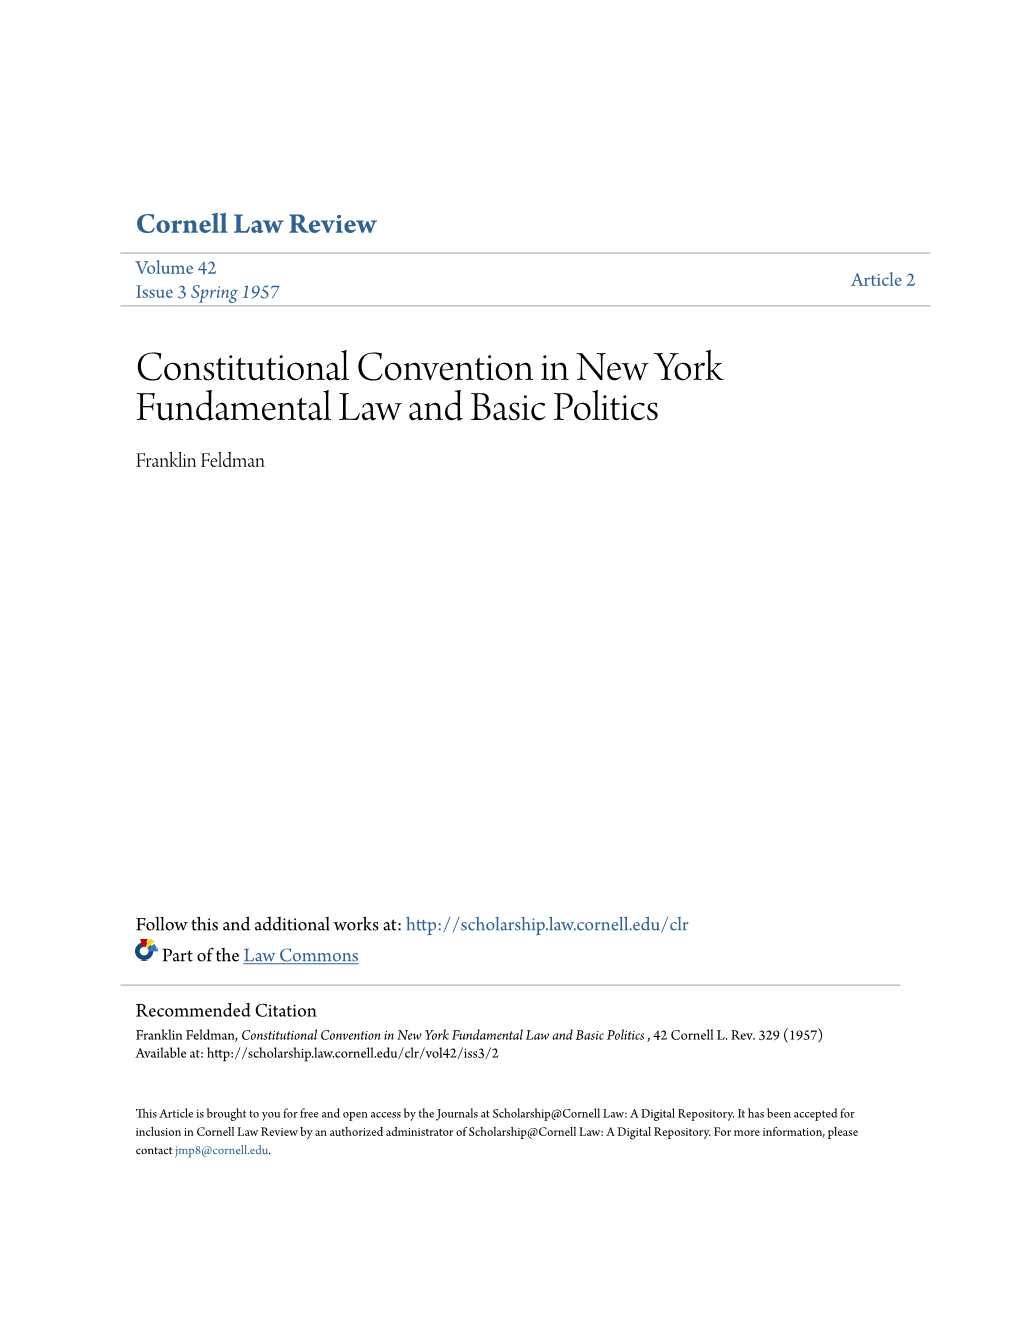 Constitutional Convention in New York Fundamental Law and Basic Politics Franklin Feldman